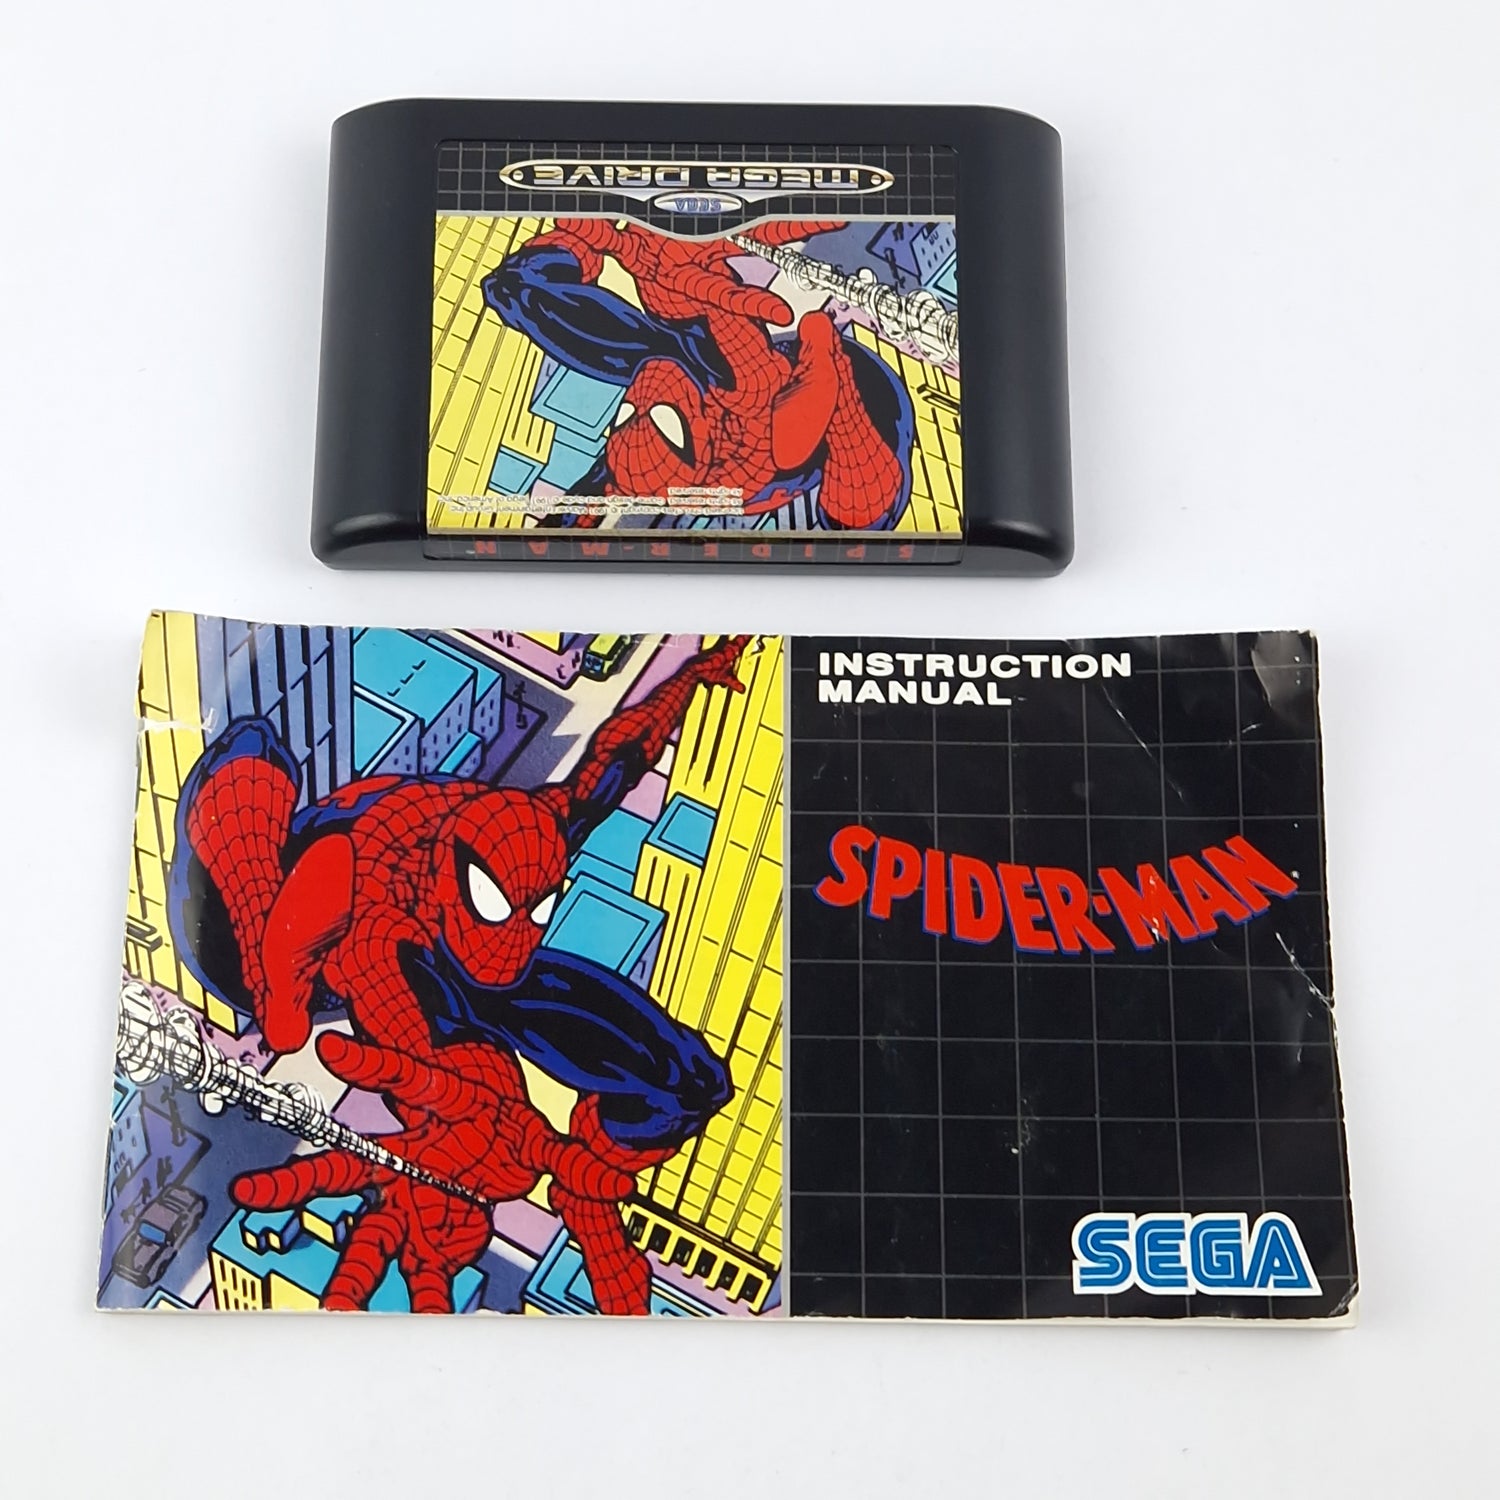 Sega Mega Drive Game: Spider-Man - Module Instructions OVP cib / MD PAL Game